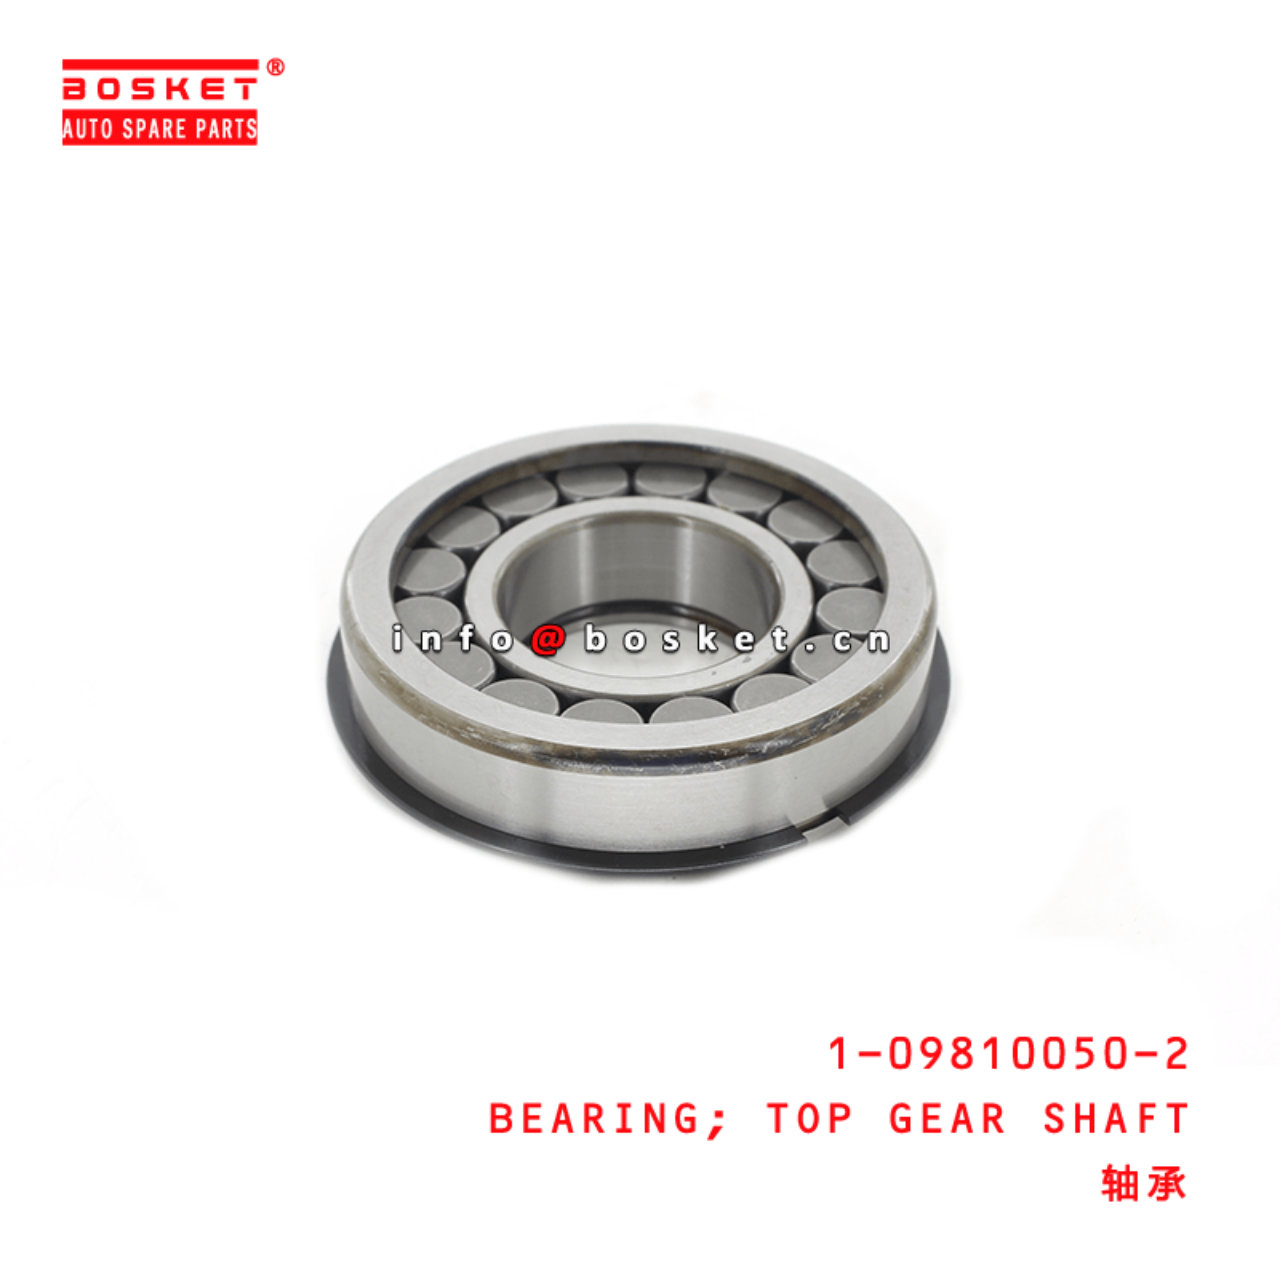 1-09810050-2 Top Gear Shaft Bearing 1098100502 Suitable for ISUZU FTR 4HK1 6HK1